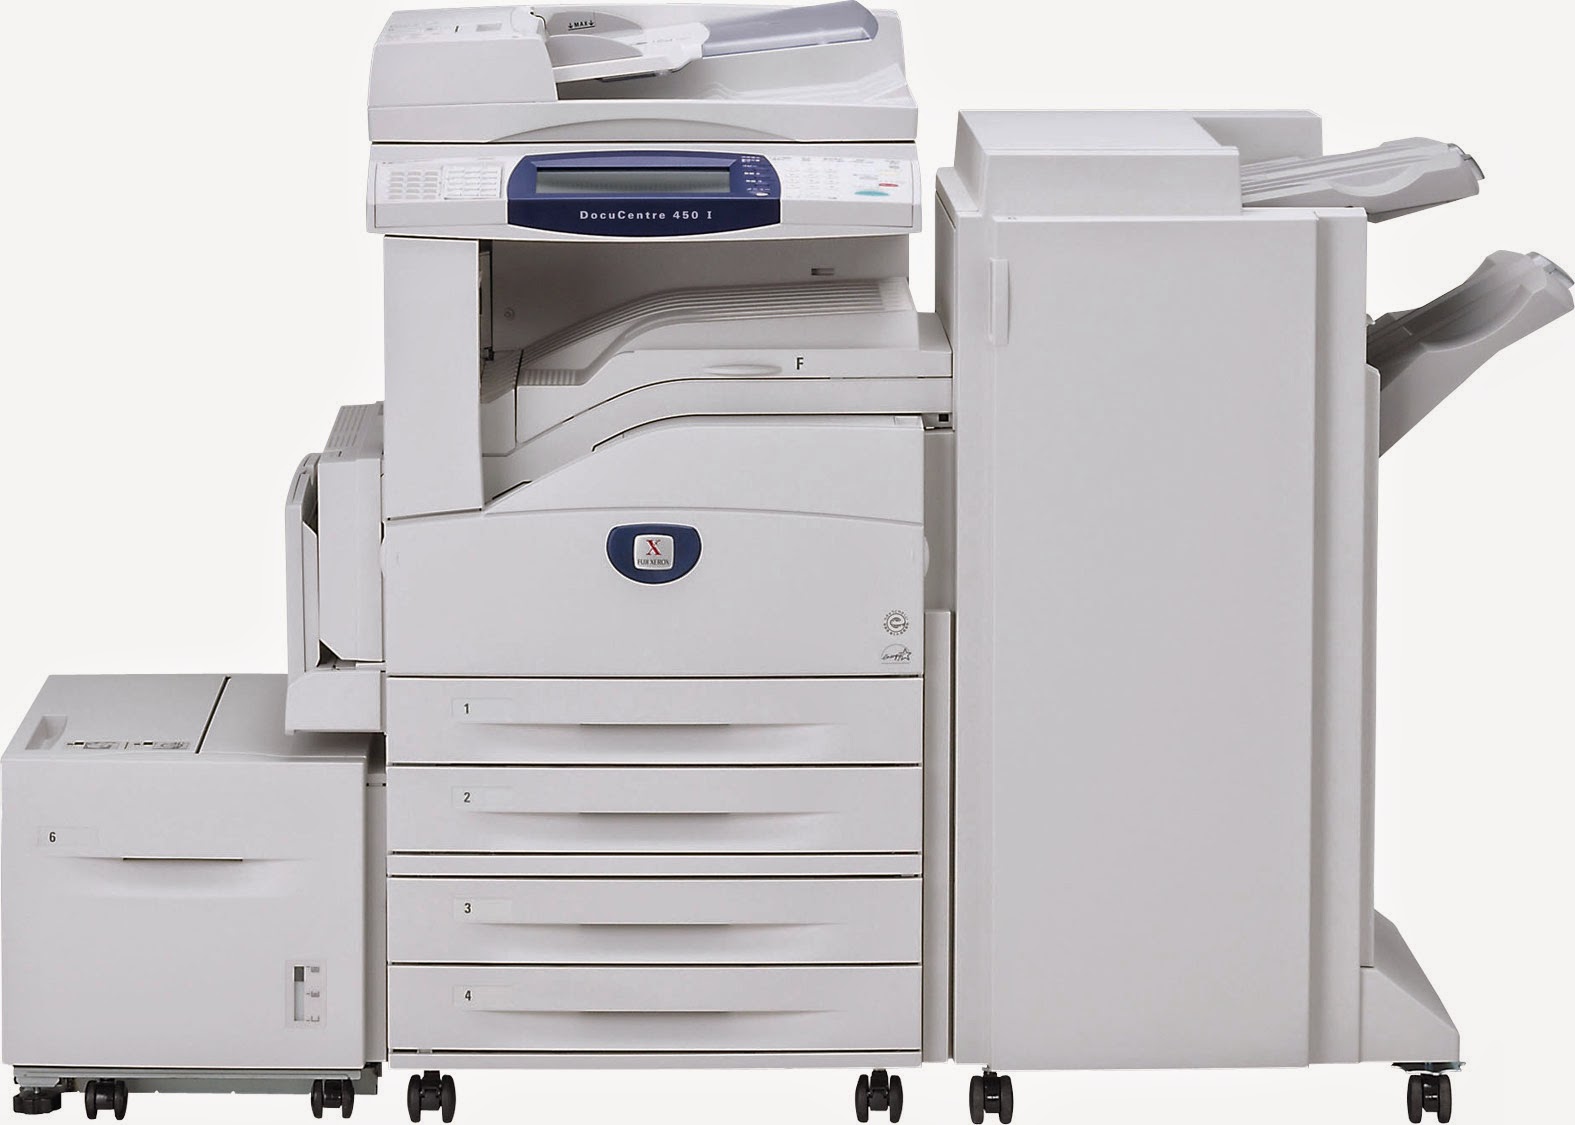 Harga Mesin Fotocopy Fuji Xerox Terbaru 2015